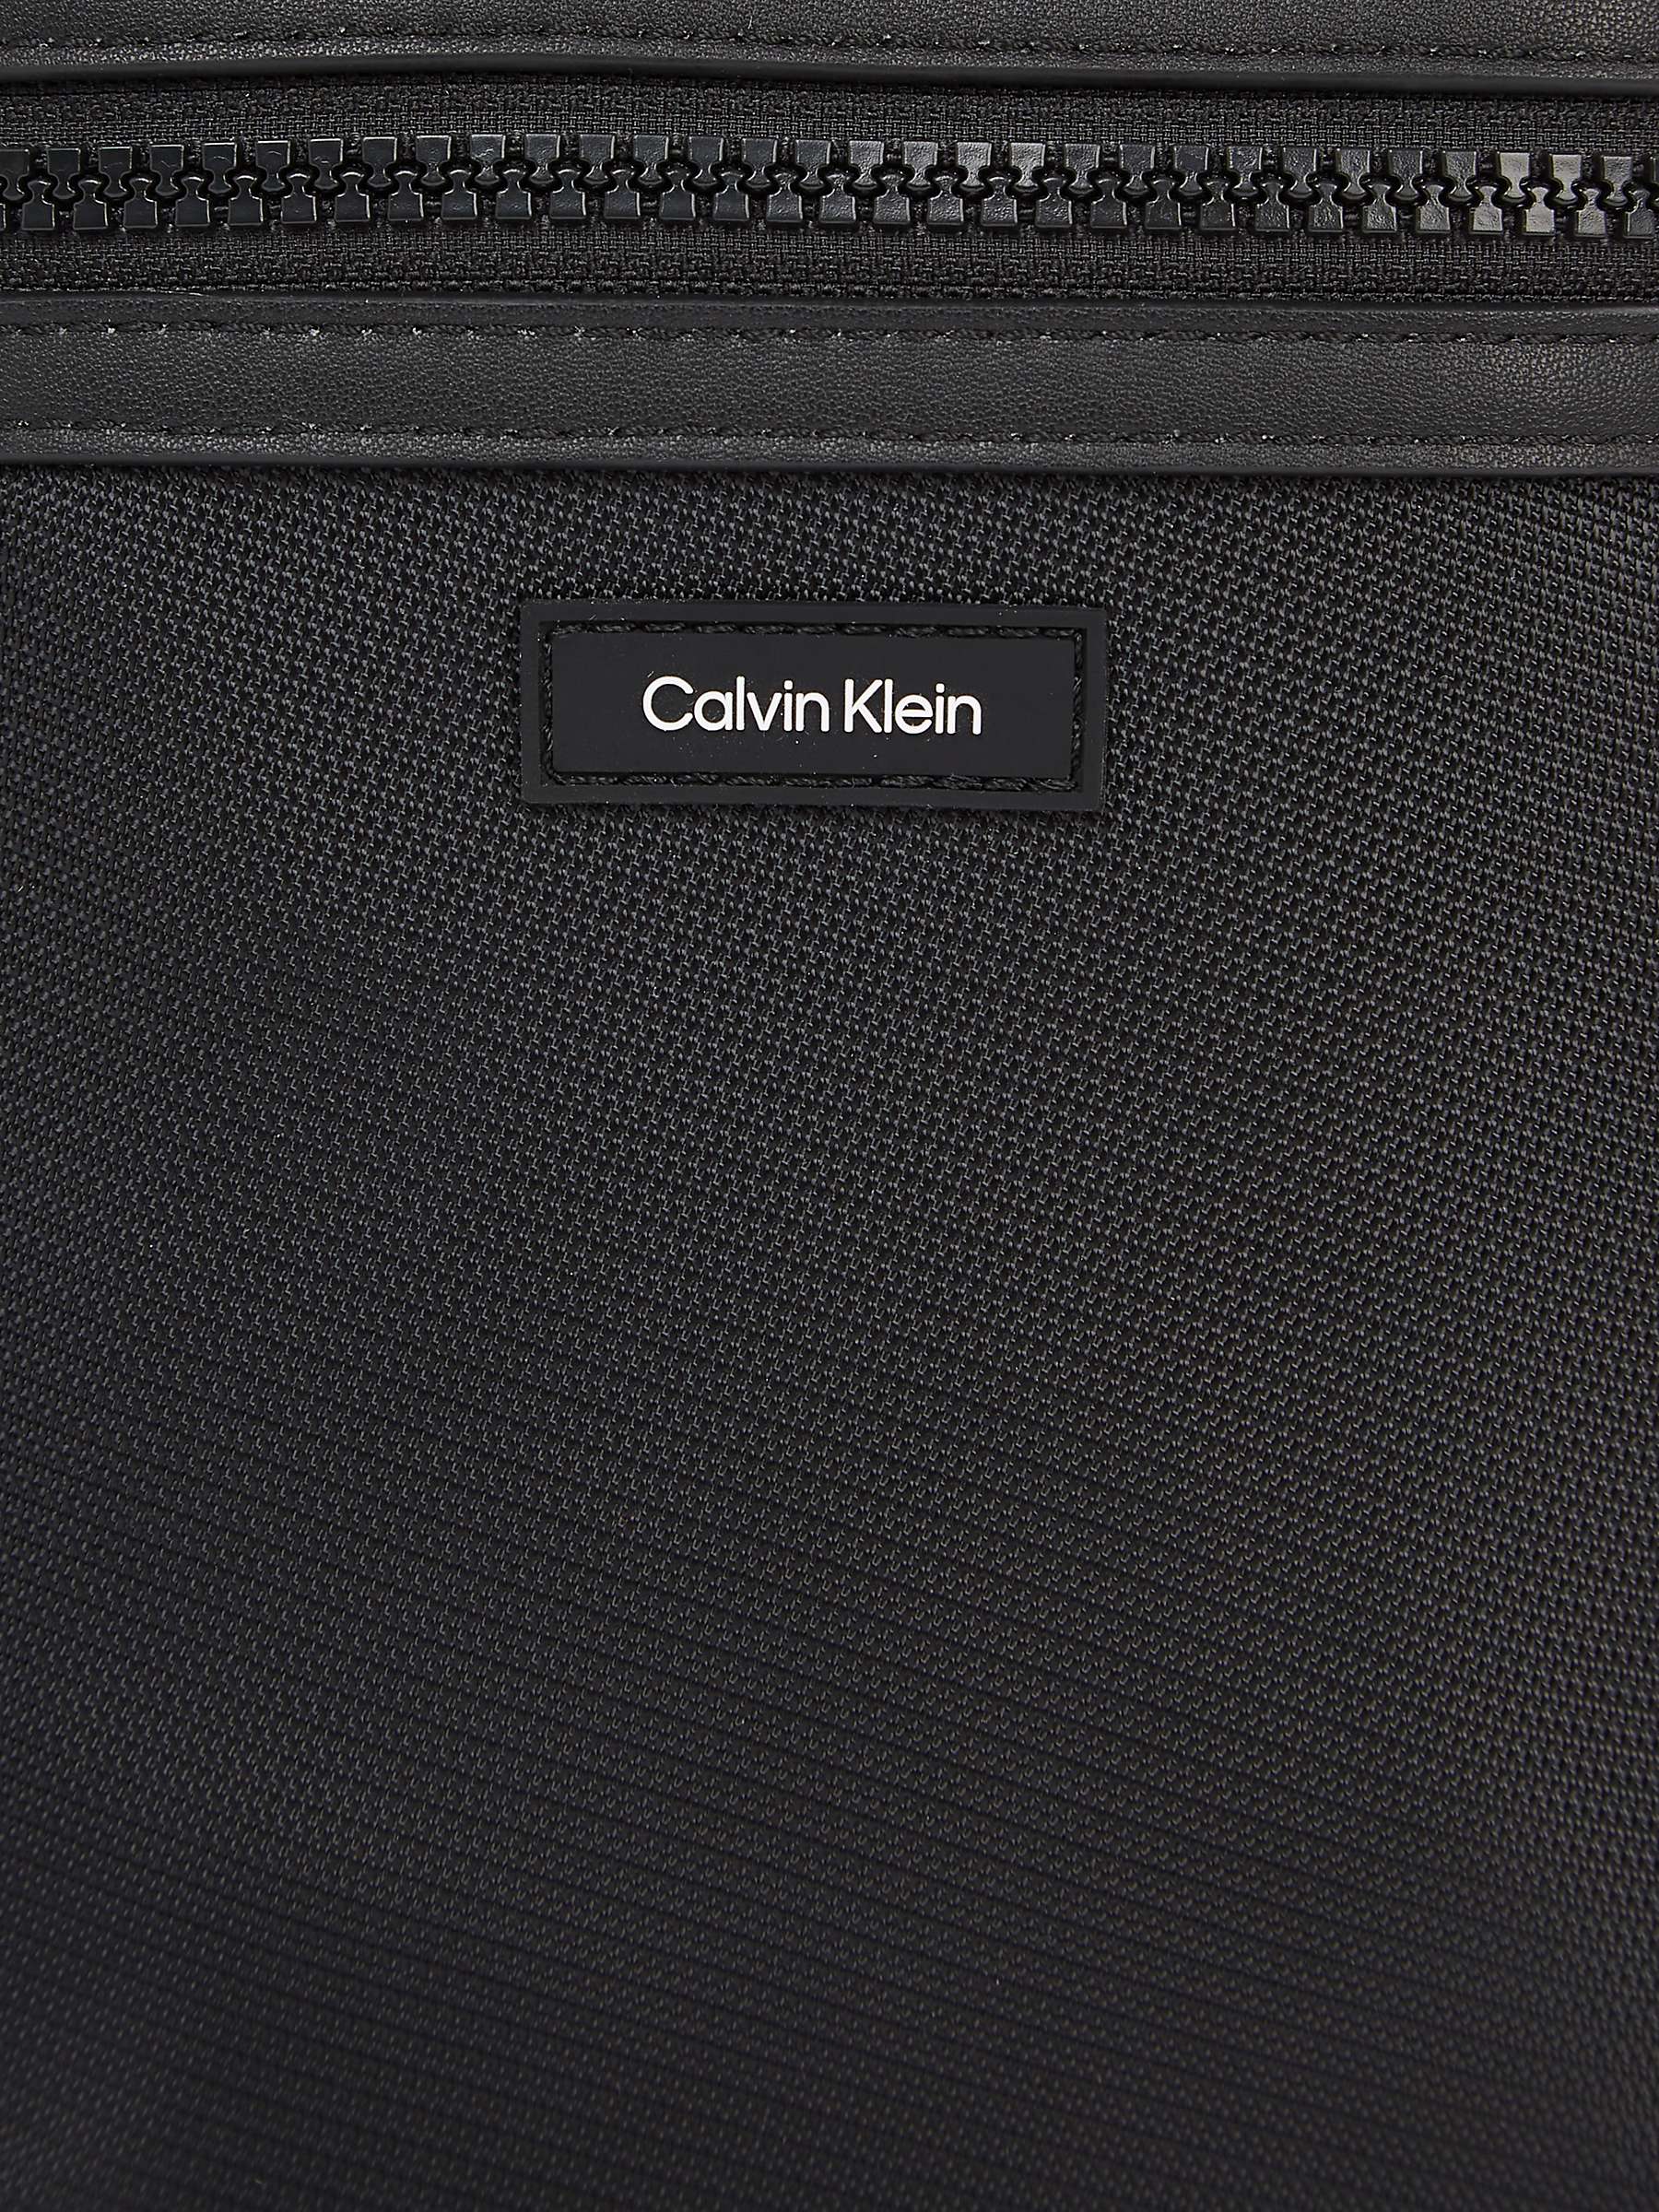 Buy Calvin Klein Essential Messenger Bag Online at johnlewis.com